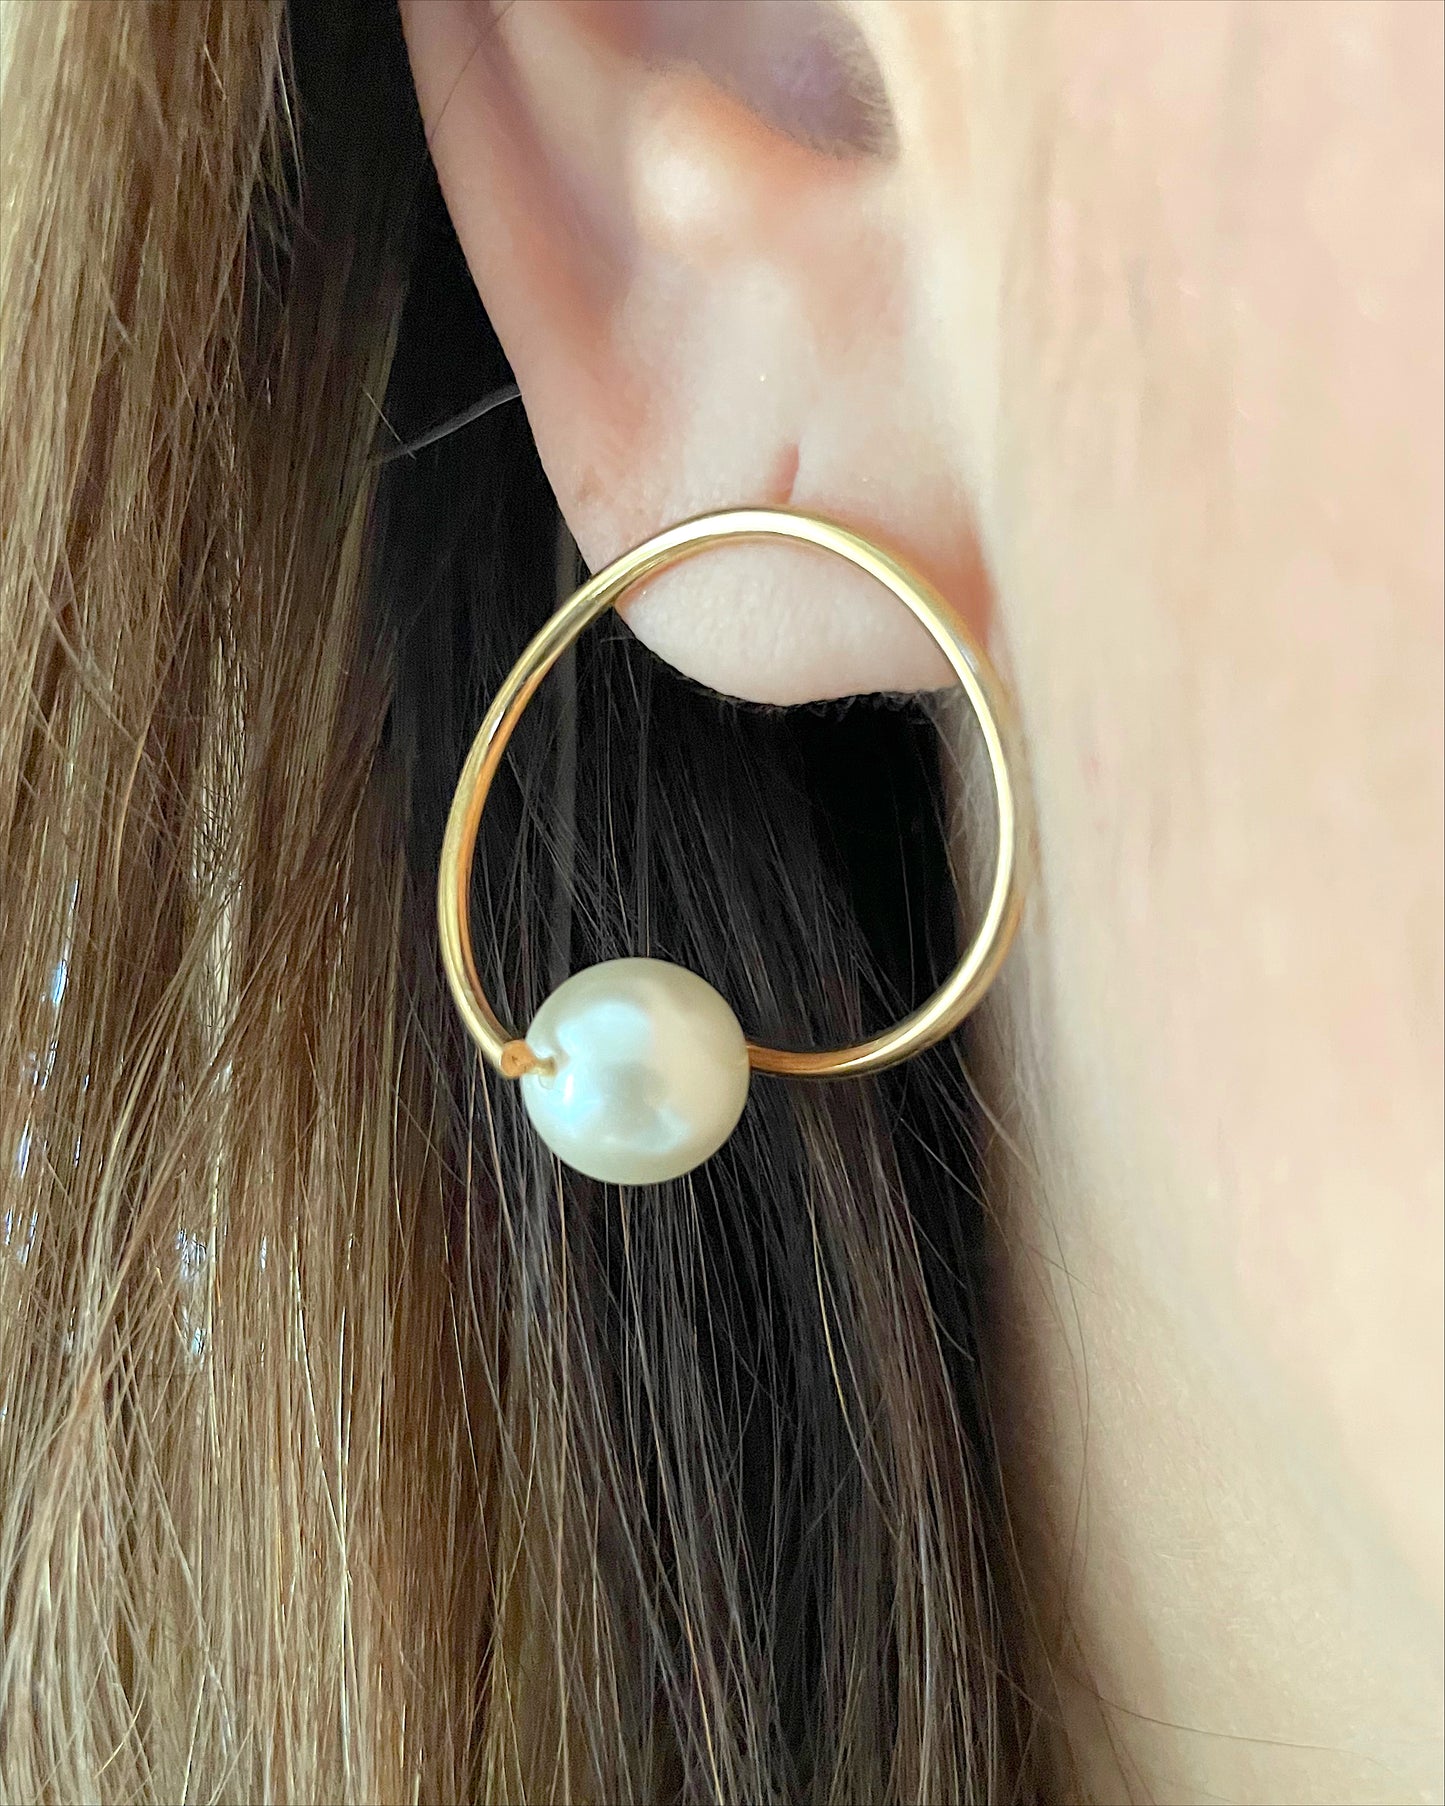 Hugged pearl earrings